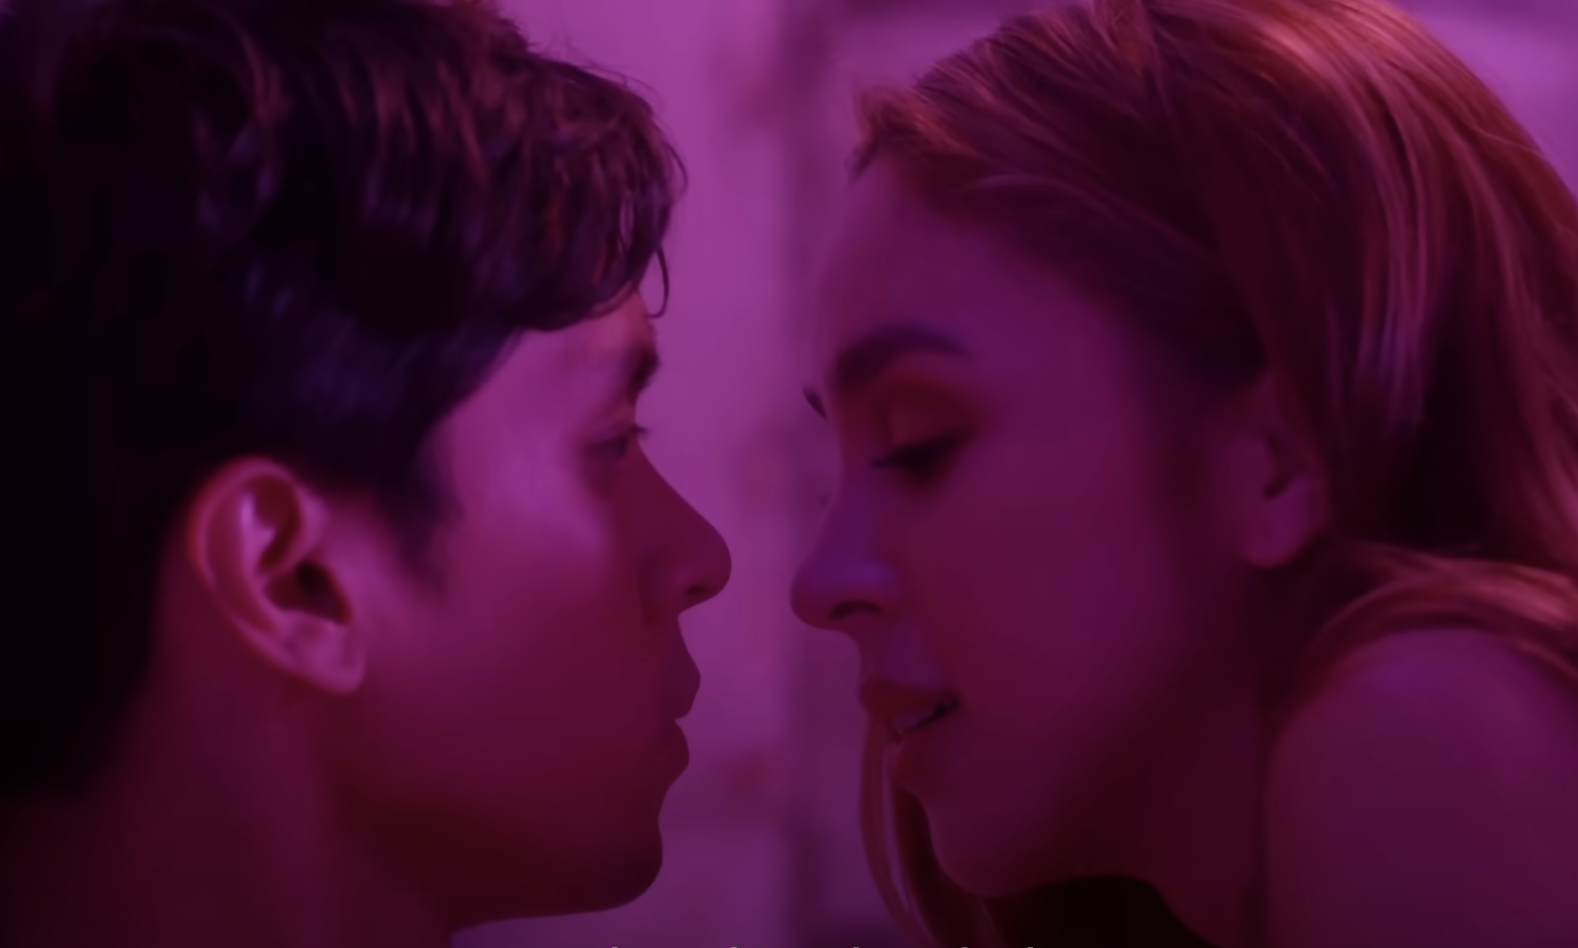 WATCH: Julia Barretto and Carlo Aquino Turn Up the Heat in "Expensive Candy" Trailer - When In Manila